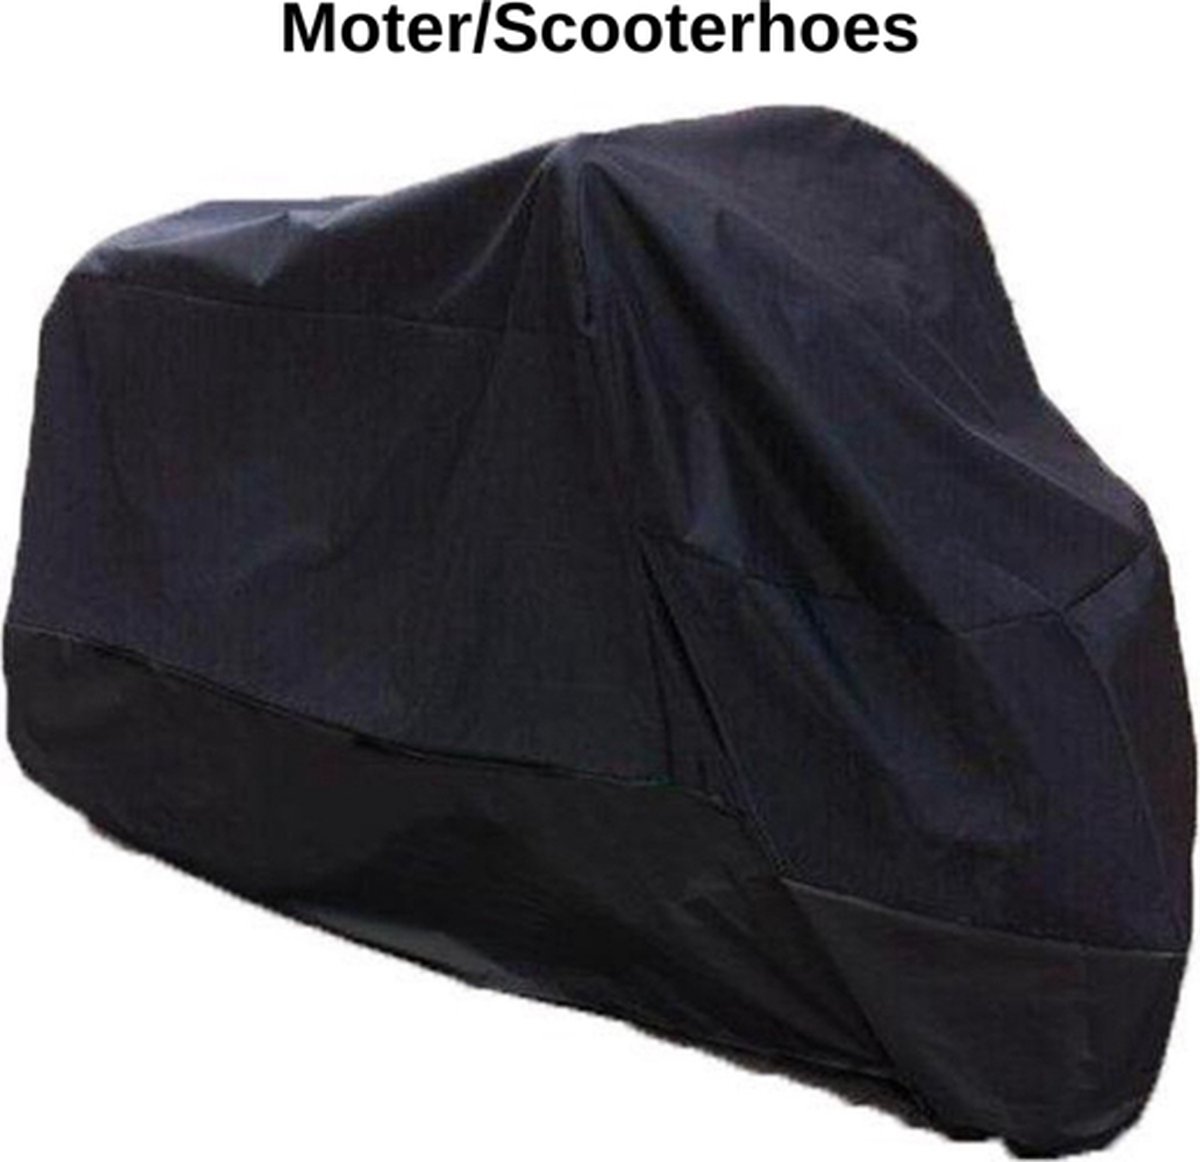 Motorhoes - Scooterhoes - Brommerhoes - 295 x 110 x 140 cm - 4XL - Ademend - Stofvrij - Waterafstotend - Scooter - Motor - Brommer - Bromfiets